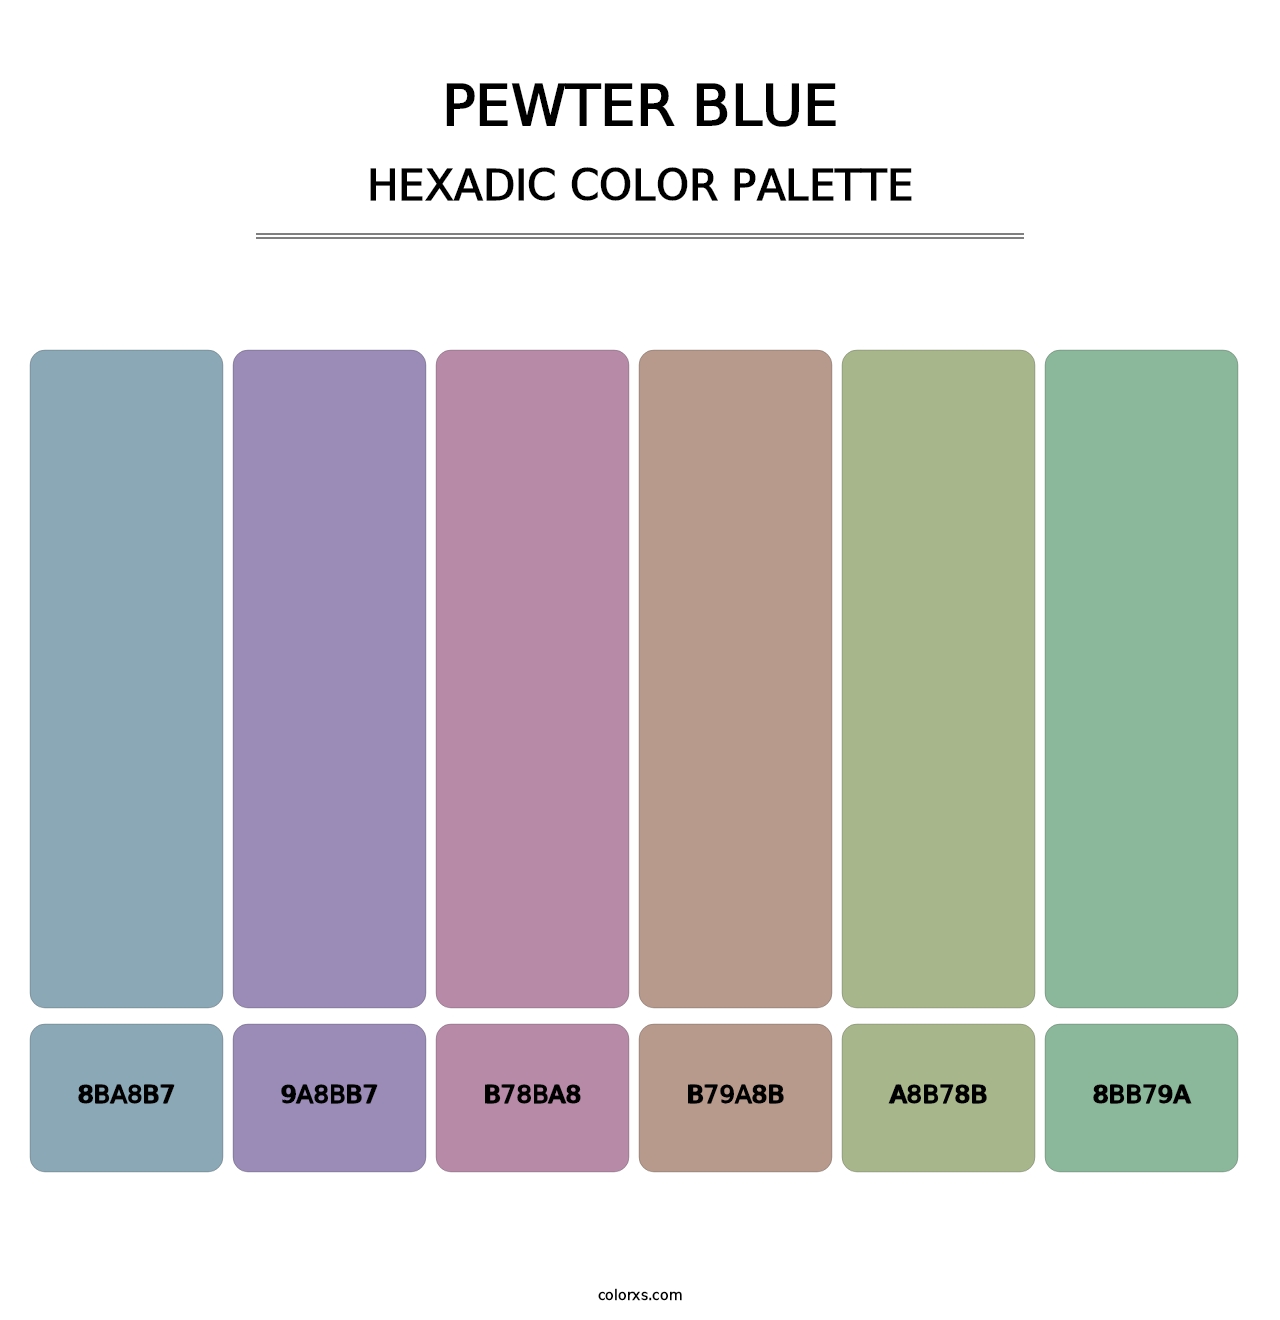 Pewter Blue - Hexadic Color Palette